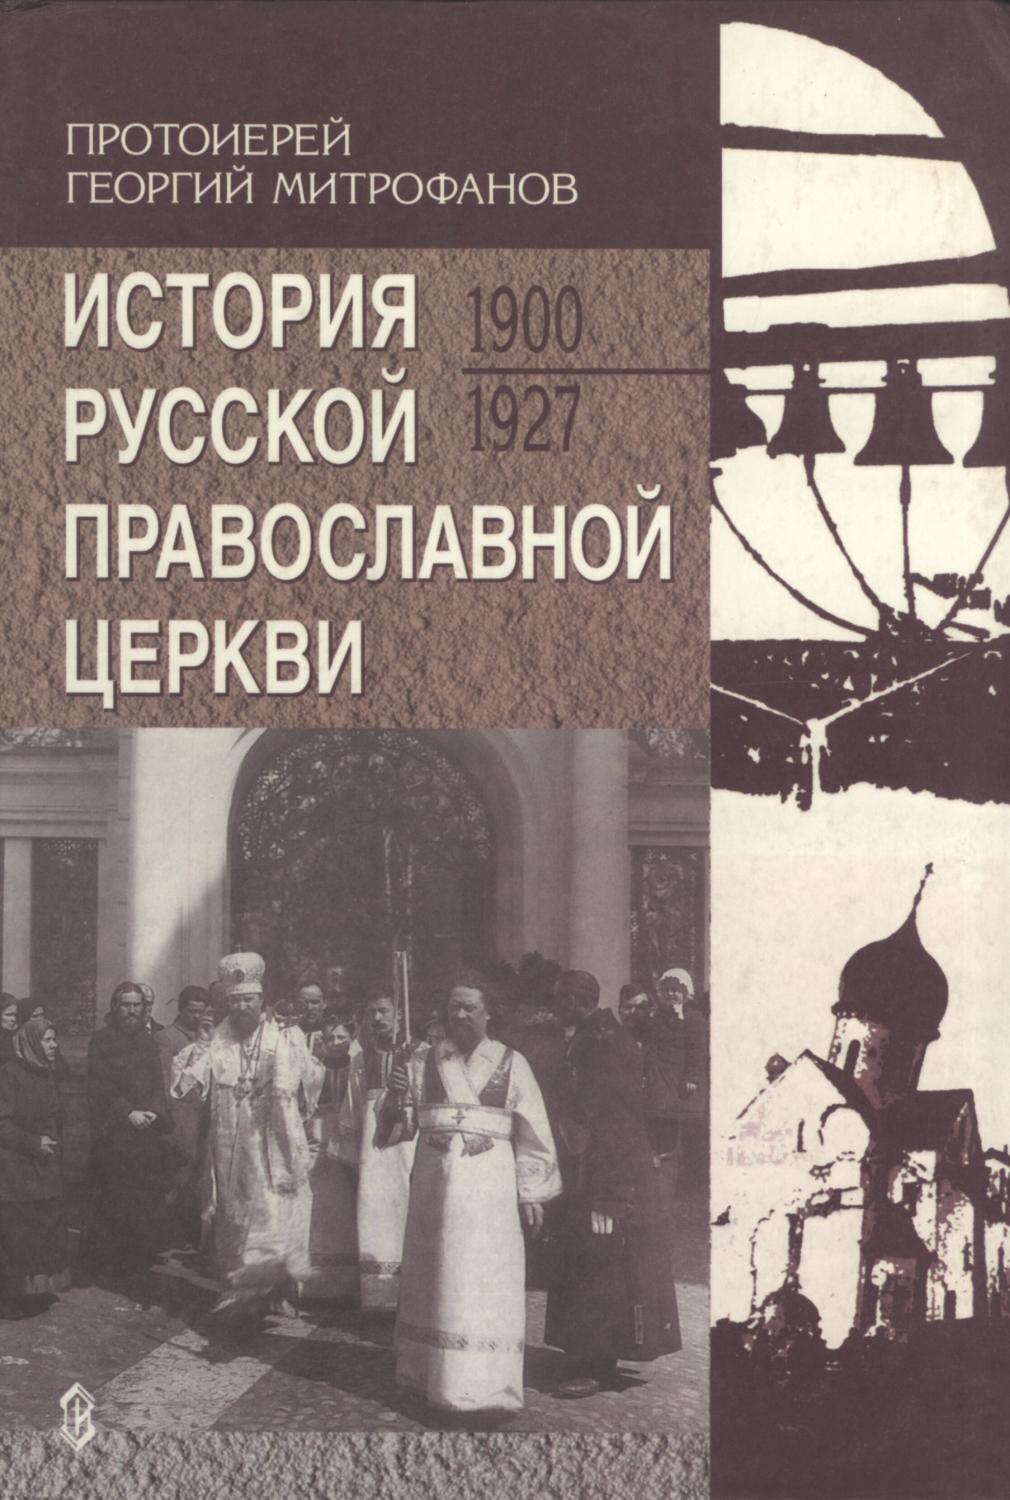 Istorija Russkoj Pravoslavnoj Cerkvi, 1900-1927 [History of the Russian Orthodox Church, 1900-1927] - Georgij Mitrofanov [Georgy Mitrofanov]